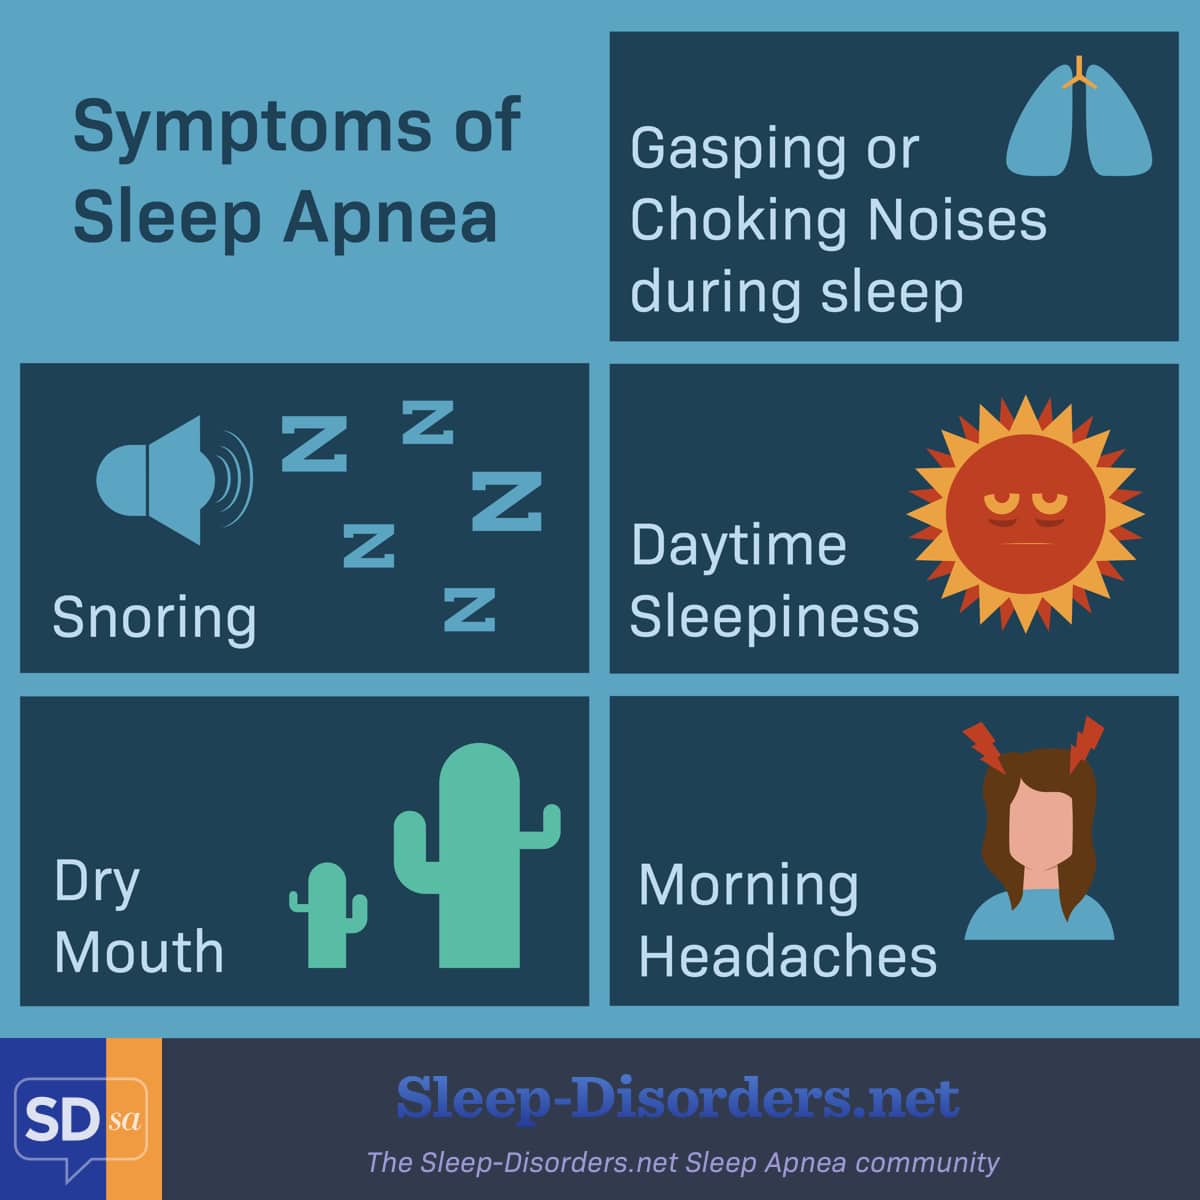 What Are Symptoms of Sleep Apnea?